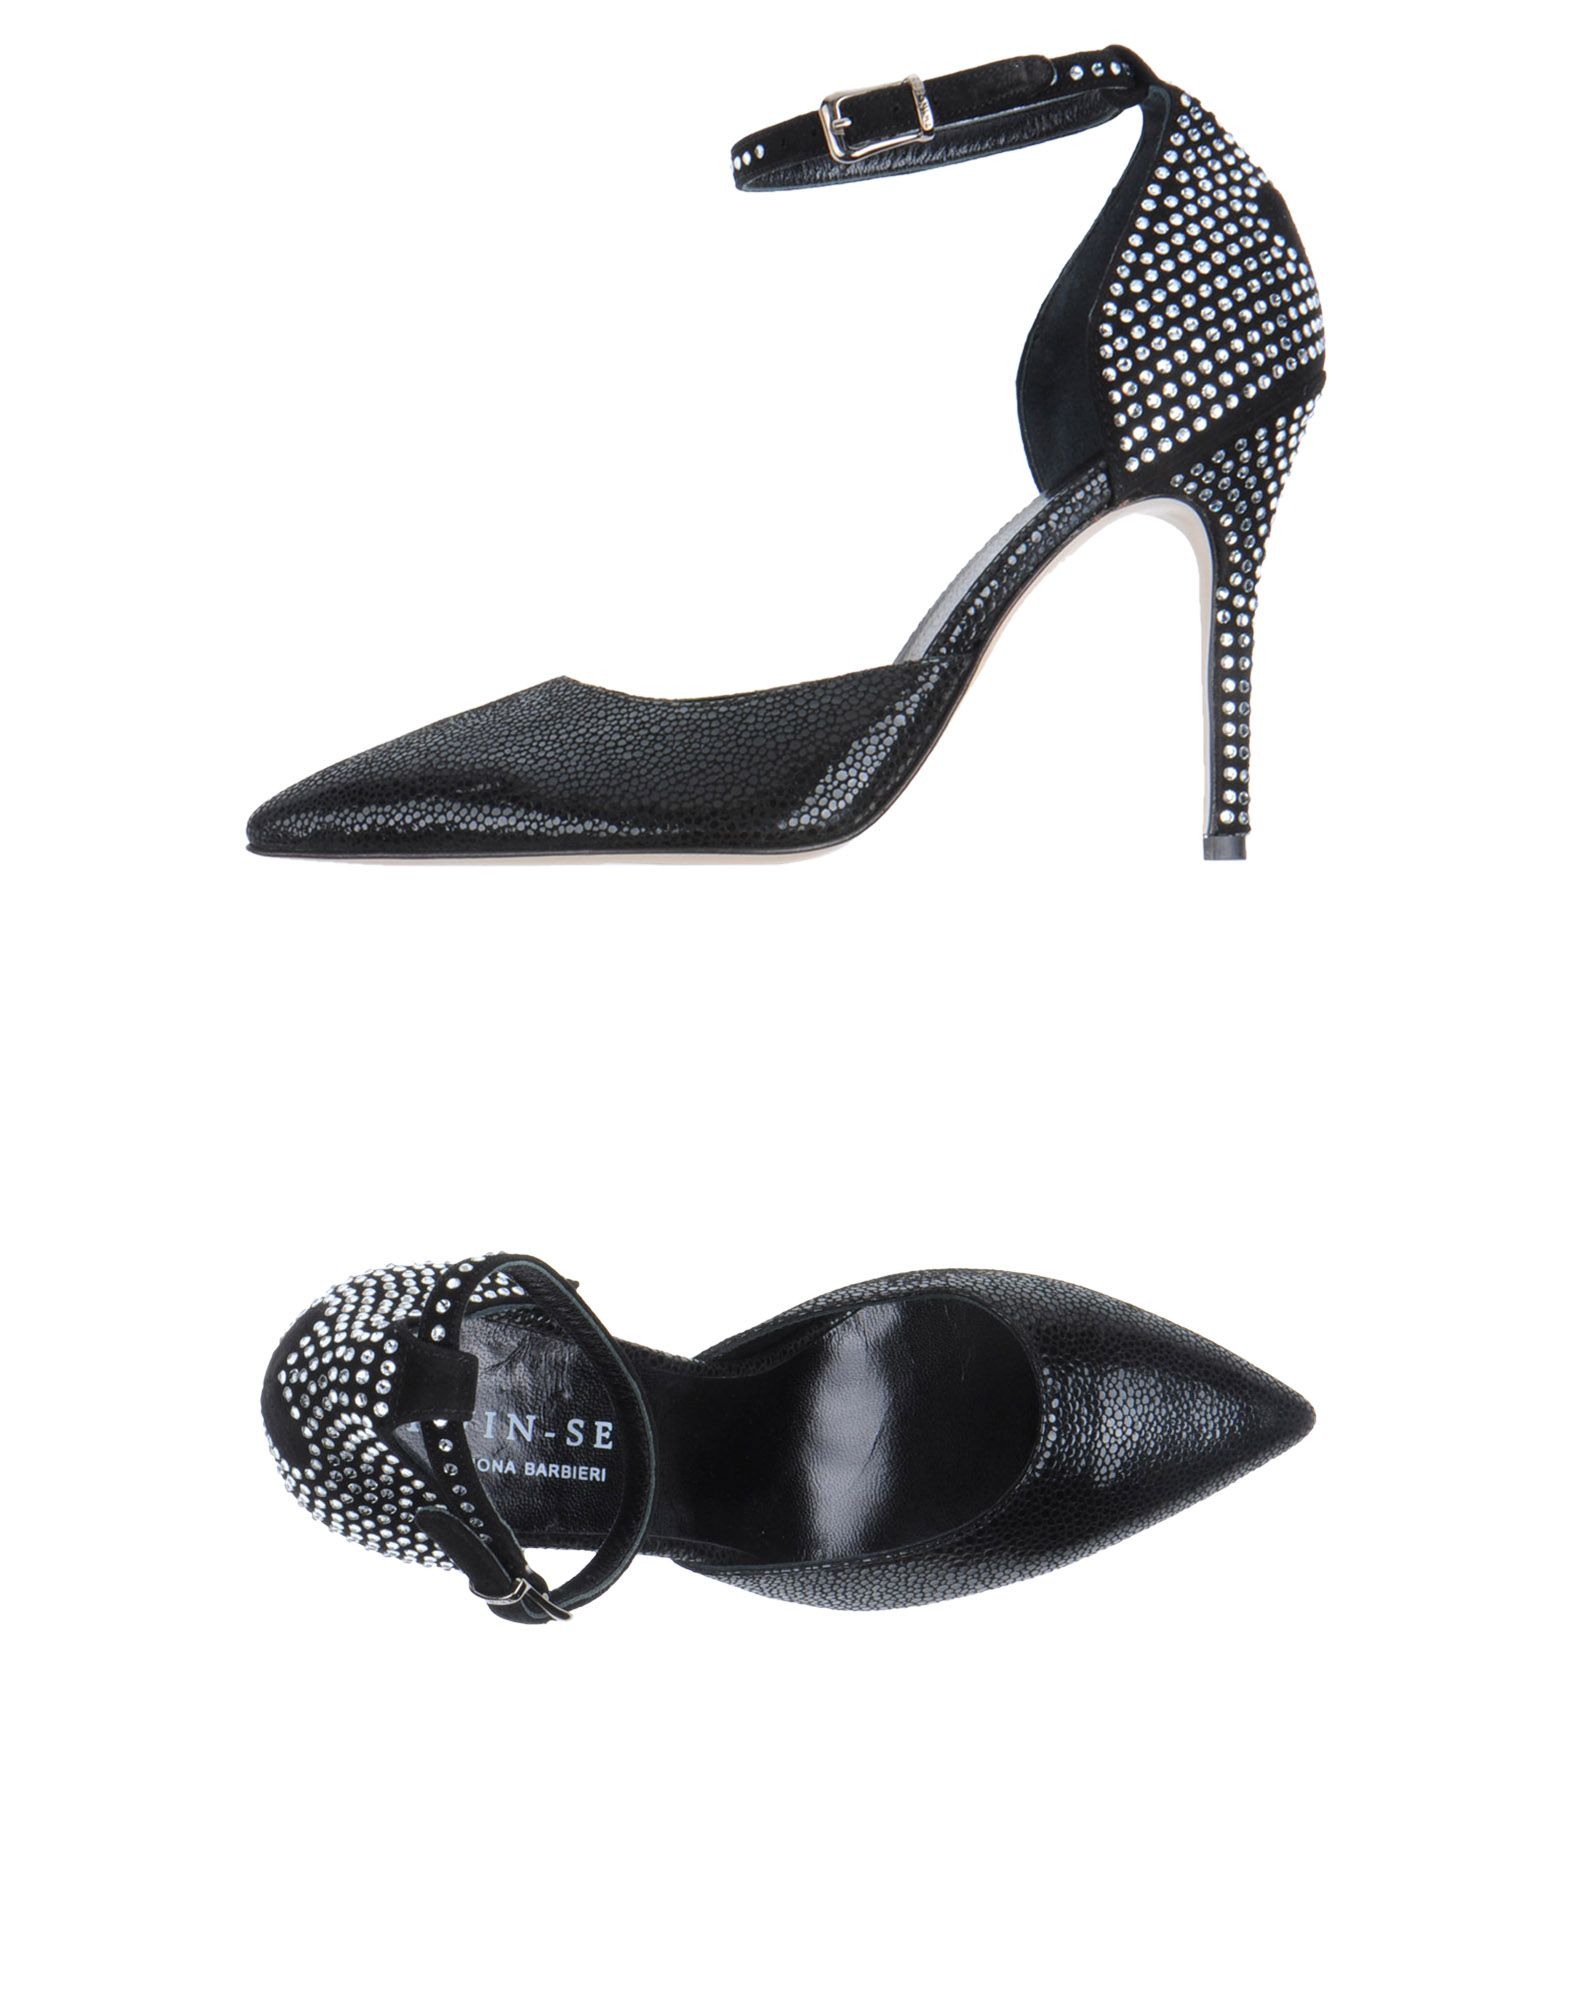 Foto Twin-Set Simona Barbieri Zapatos De SalóN Mujer Negro